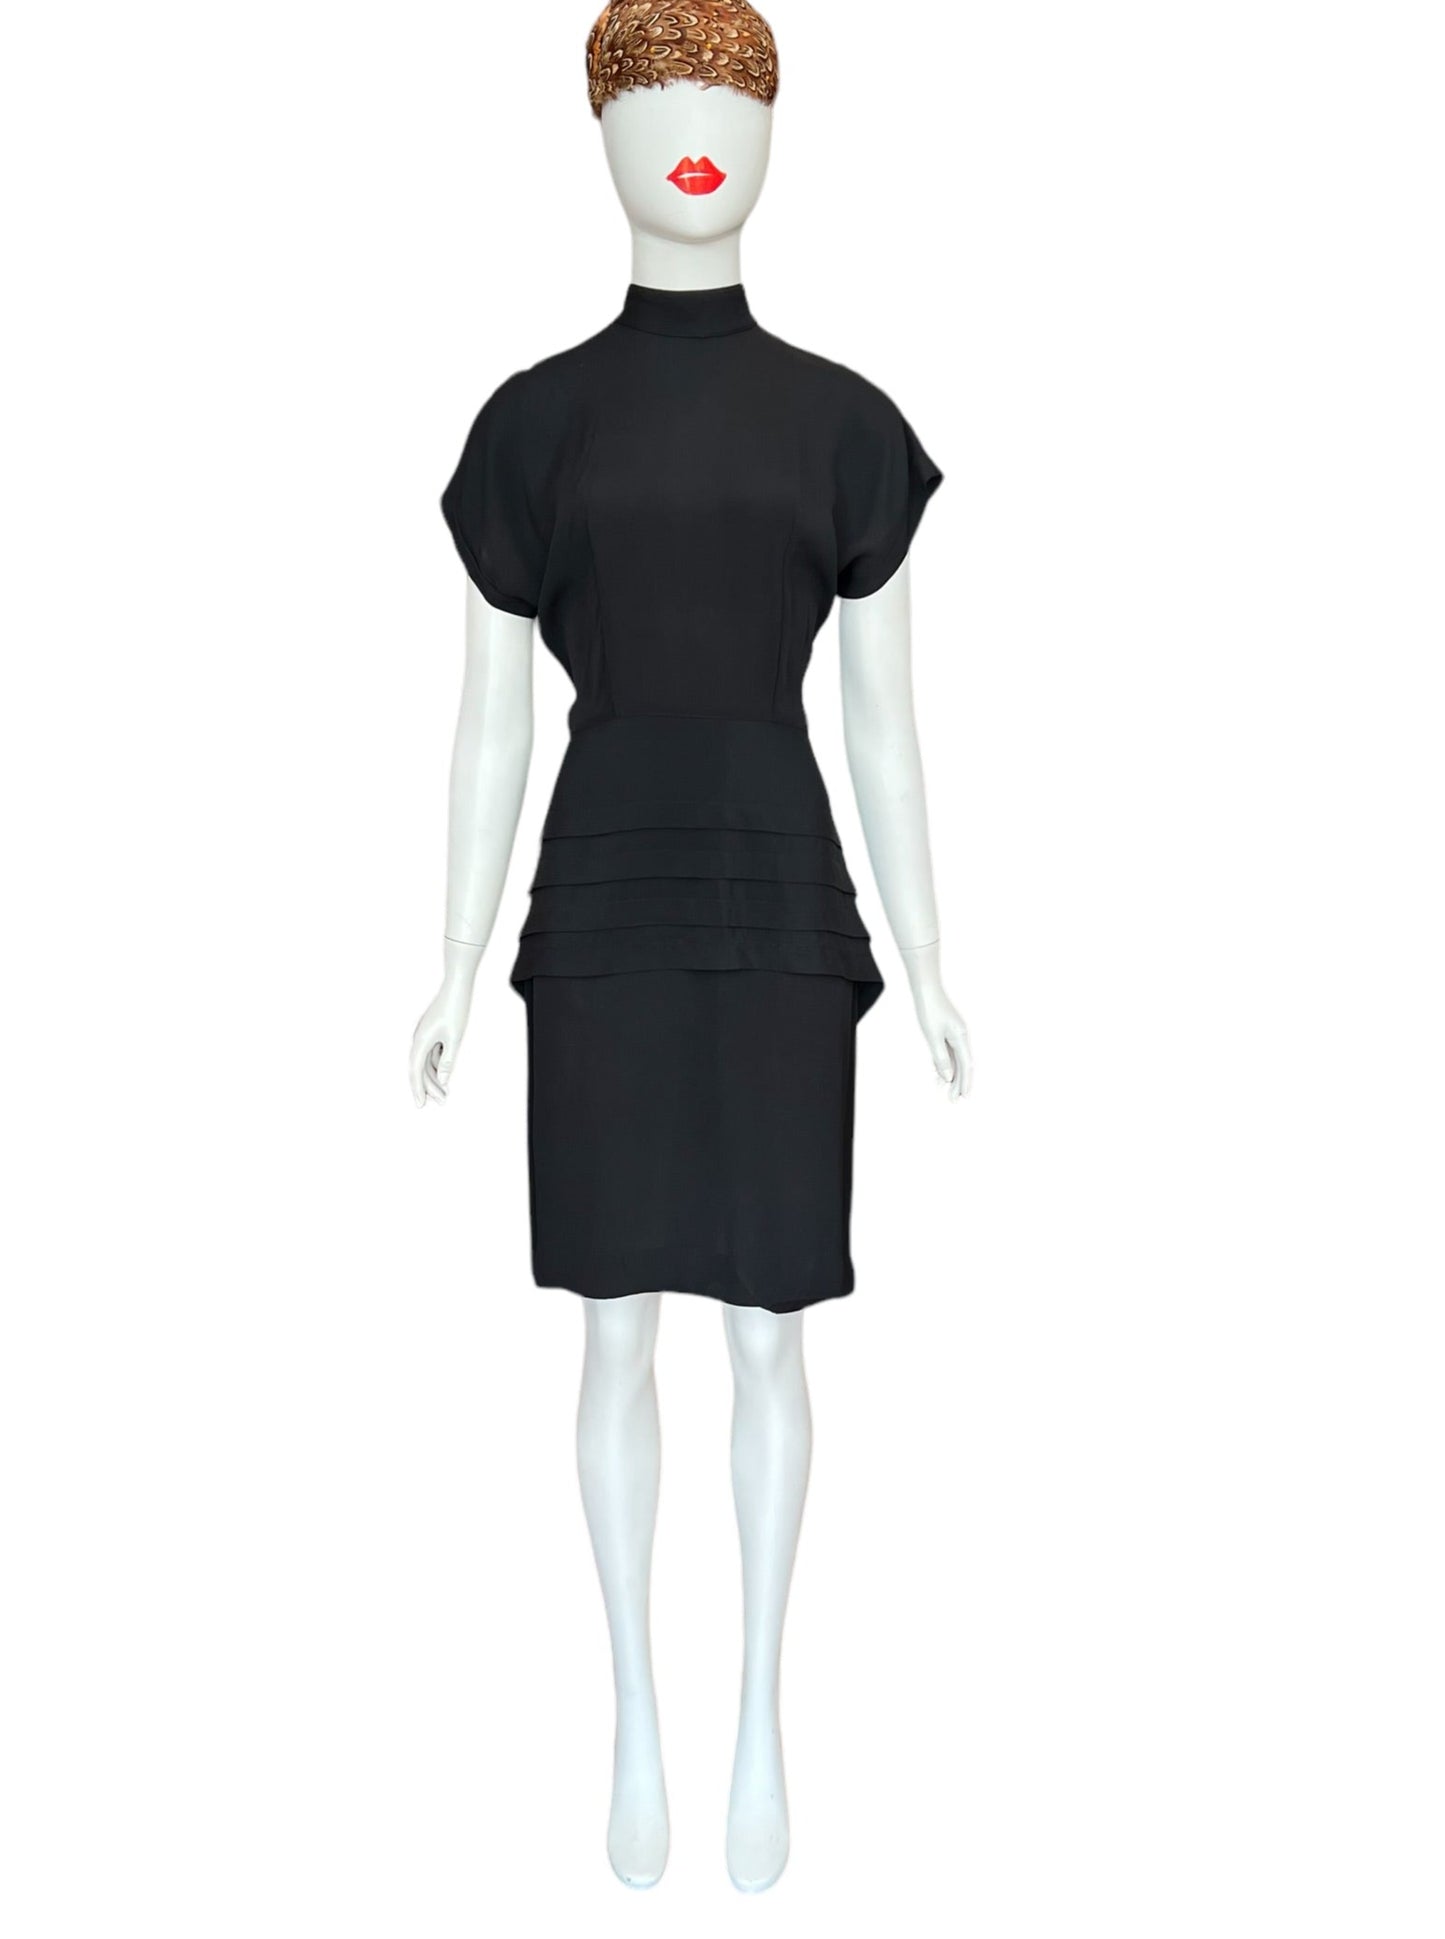 vintage LBD: short sleeved, high neck, peplum tiered waist cocktail dress